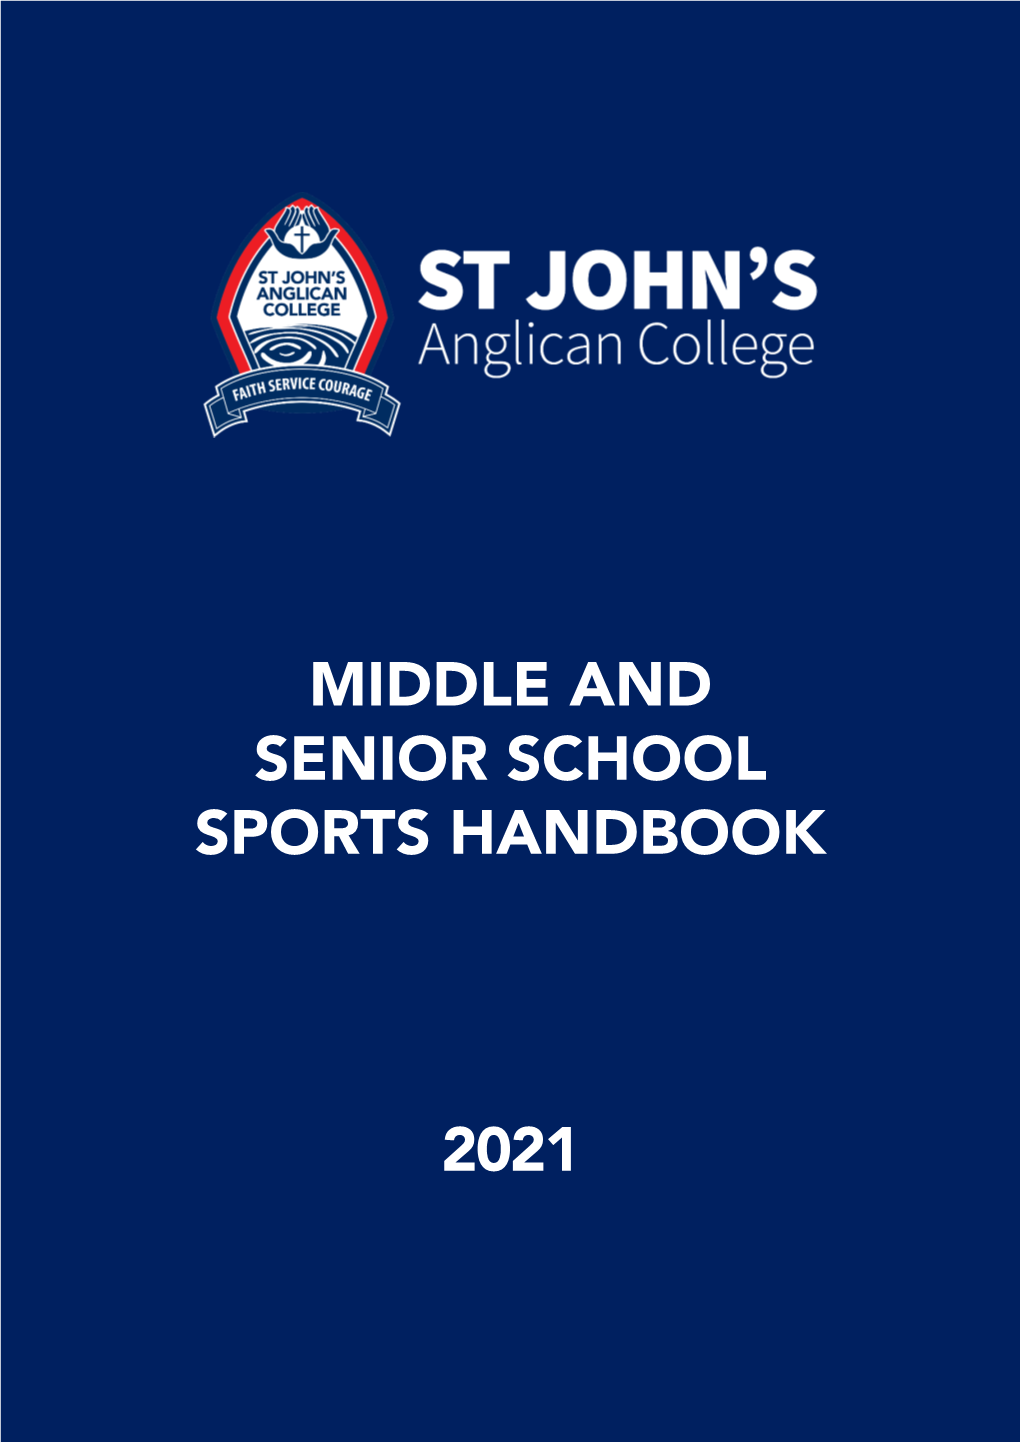 Middle and Senior School Sports Handbook 2021